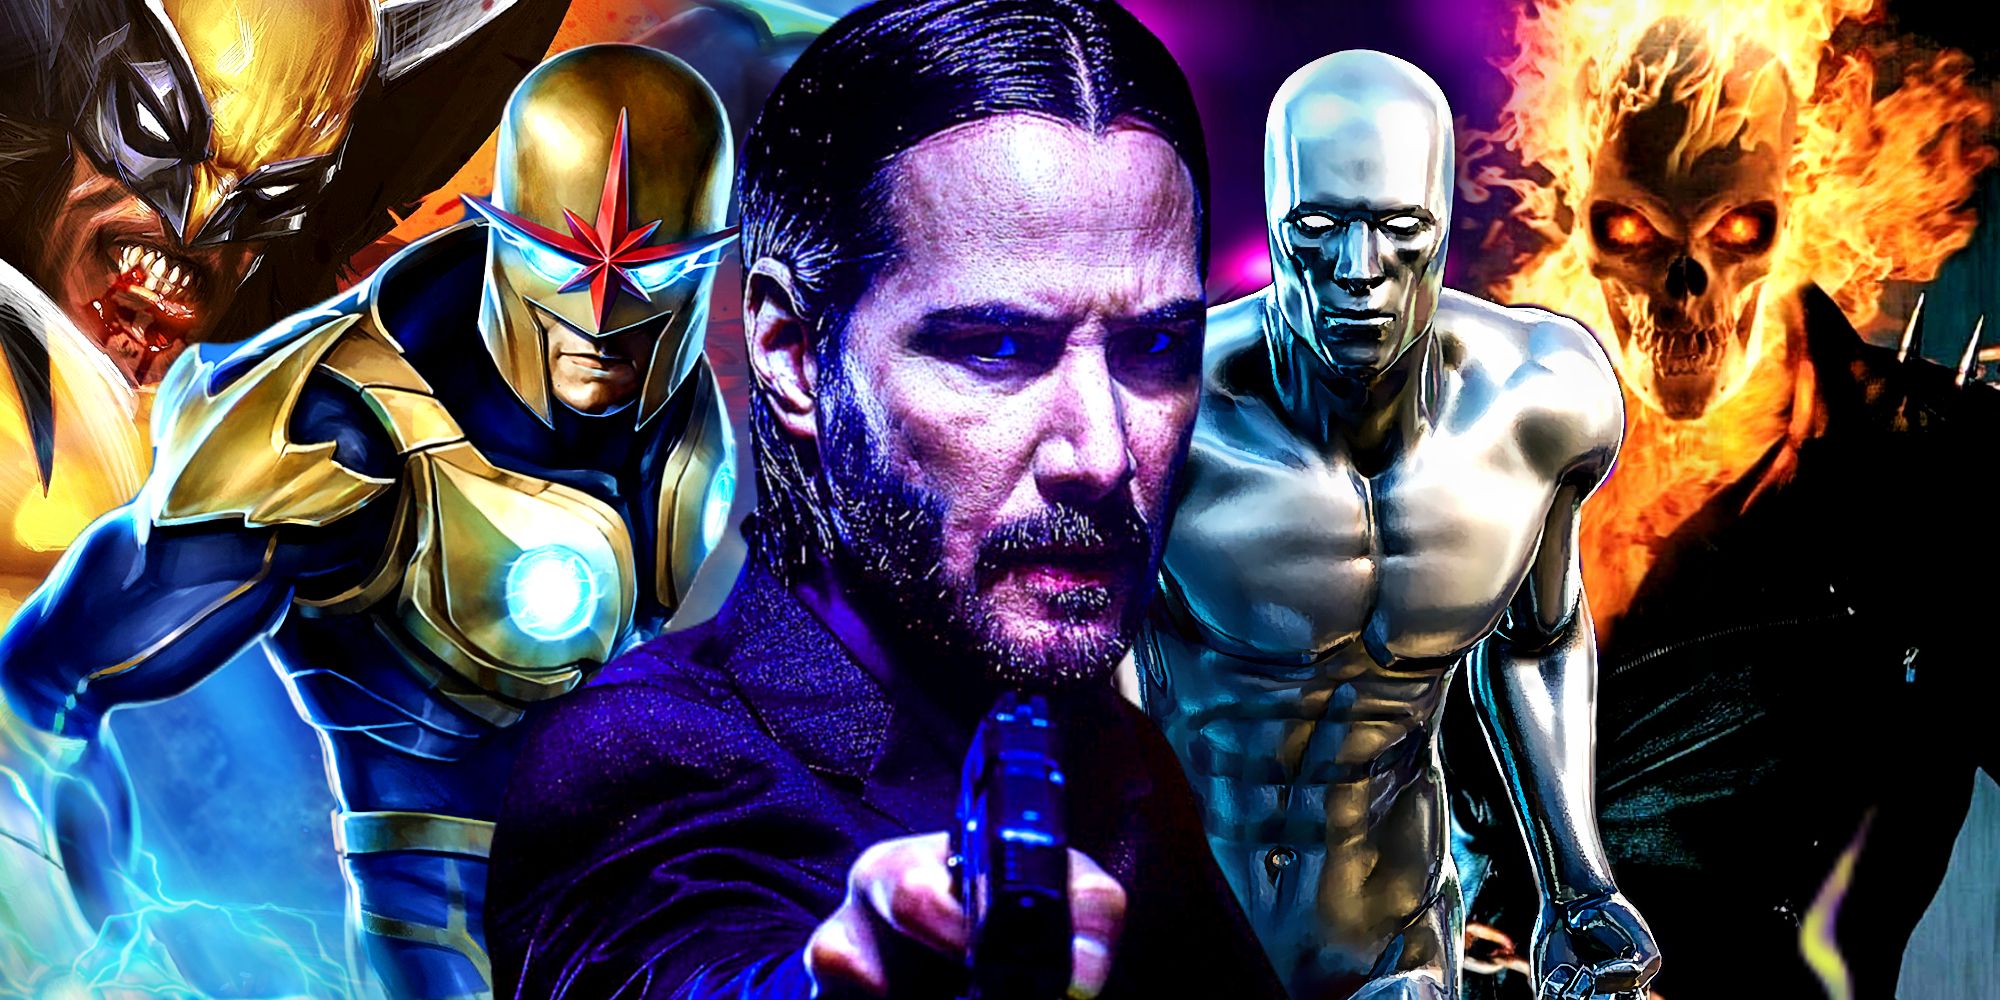 Keanu Reeves as John Wick Alongside His Marvel Fan Castings Ghost Rider, Nova, Silver Surfer, and Wolverine